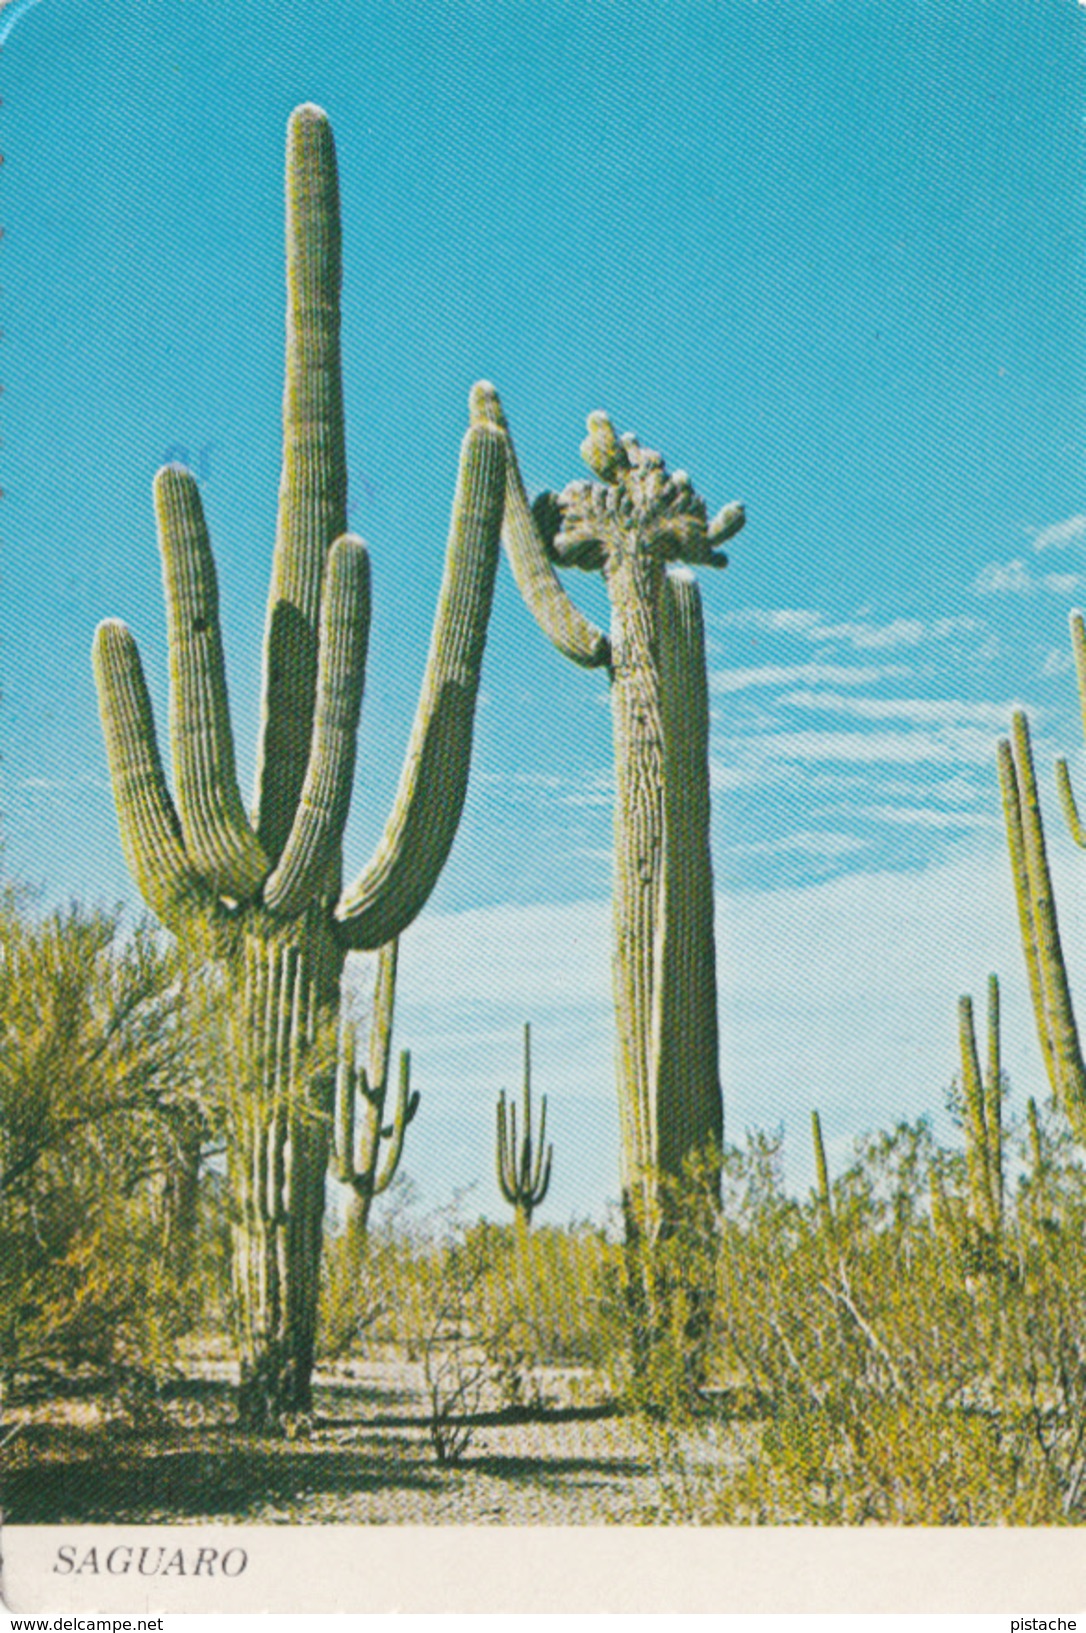 Cactus Saguaro In Sonoran Desert - USA & Mexico - Stamp & Postmark 1979 - 2 Scans - Cactusses